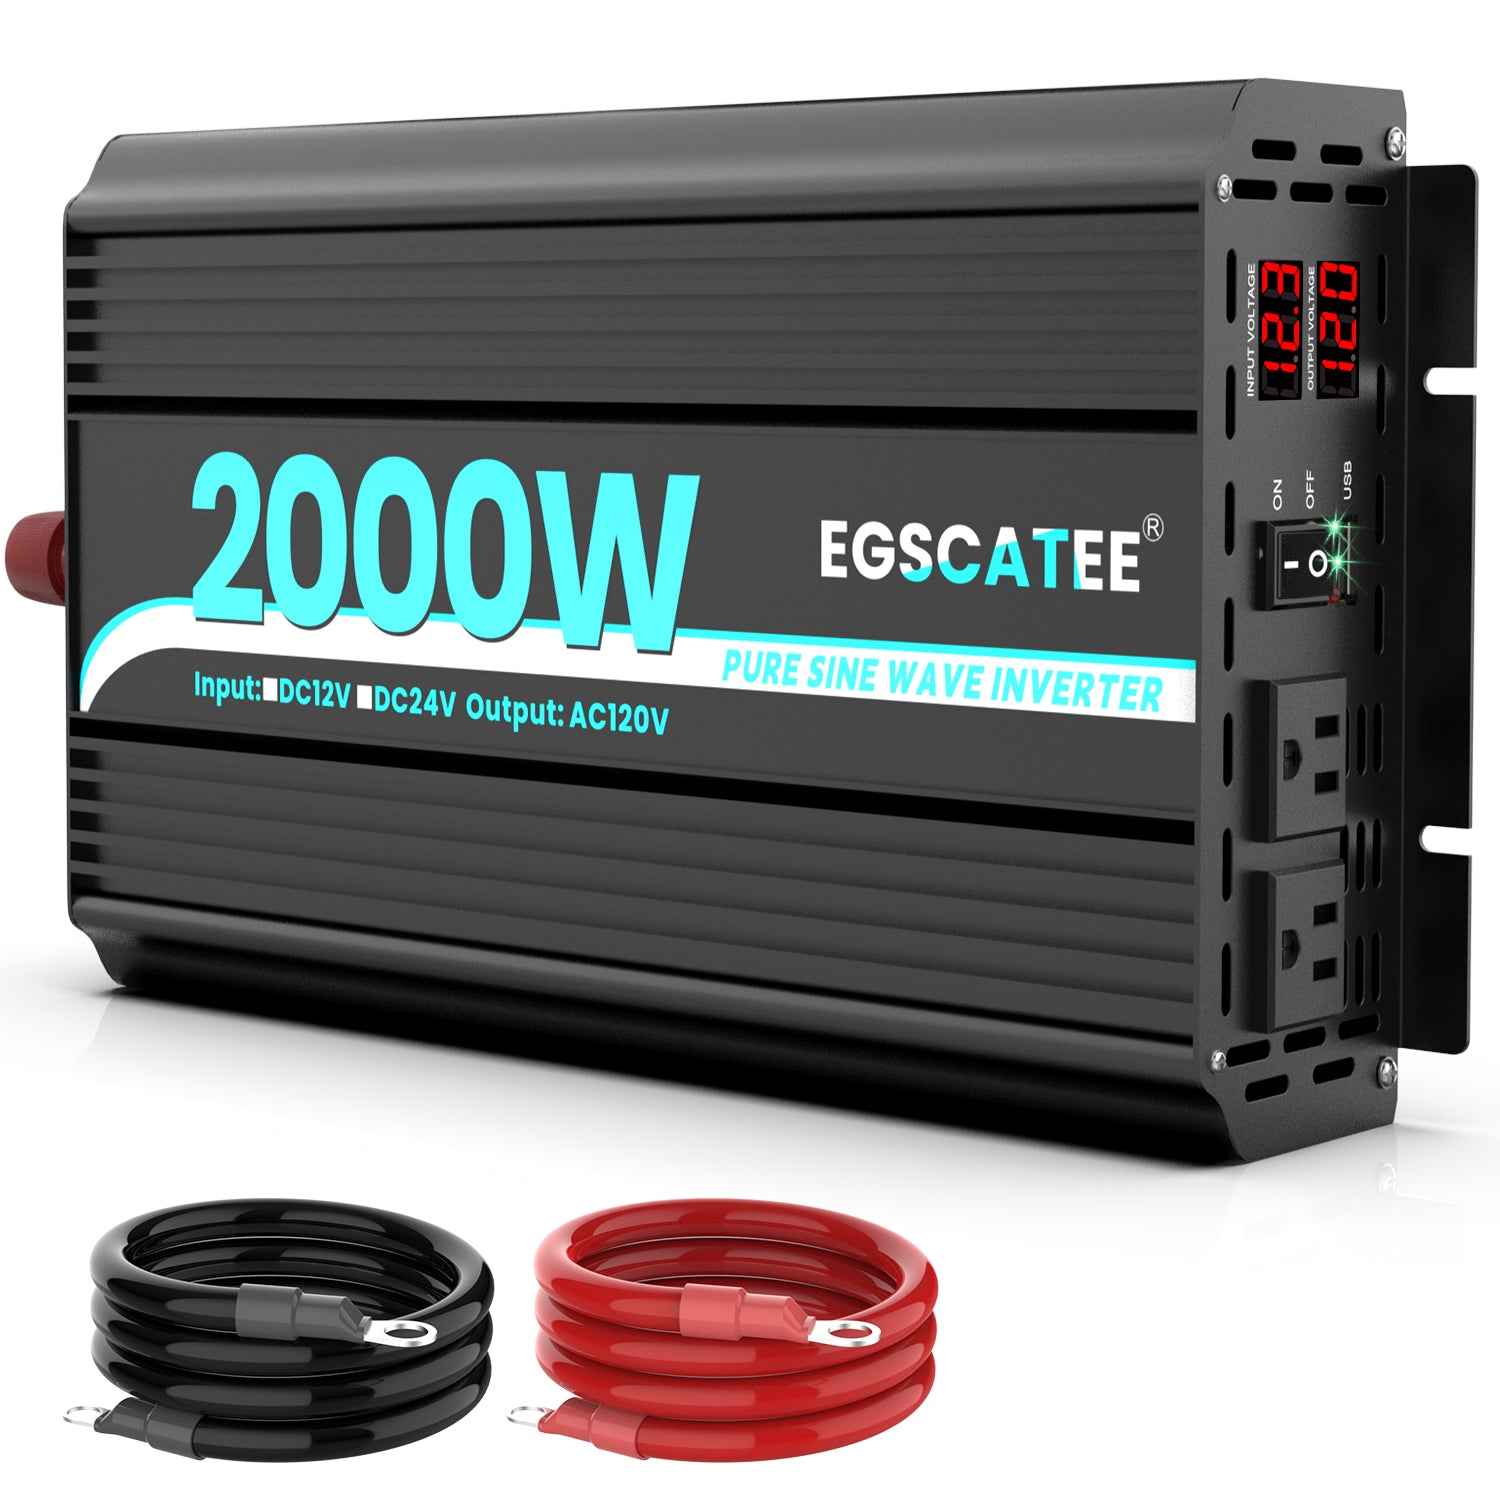 EGSCATEE 2000W Pure Sine Wave Power Inverter 12V DC to 110/120V AC